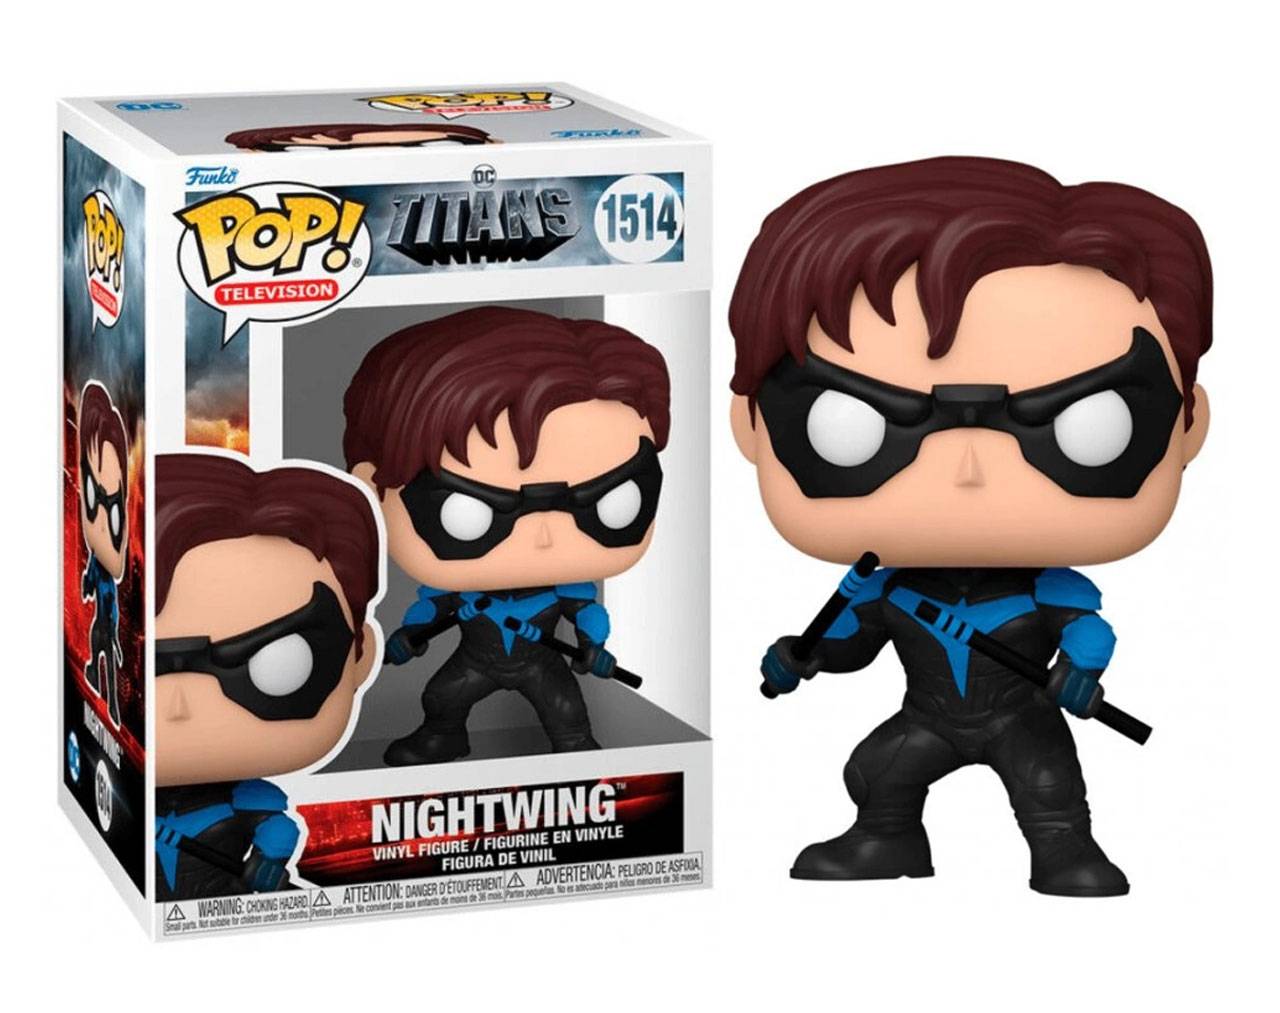 Nightwing - DC Titans Pop! Vinyl